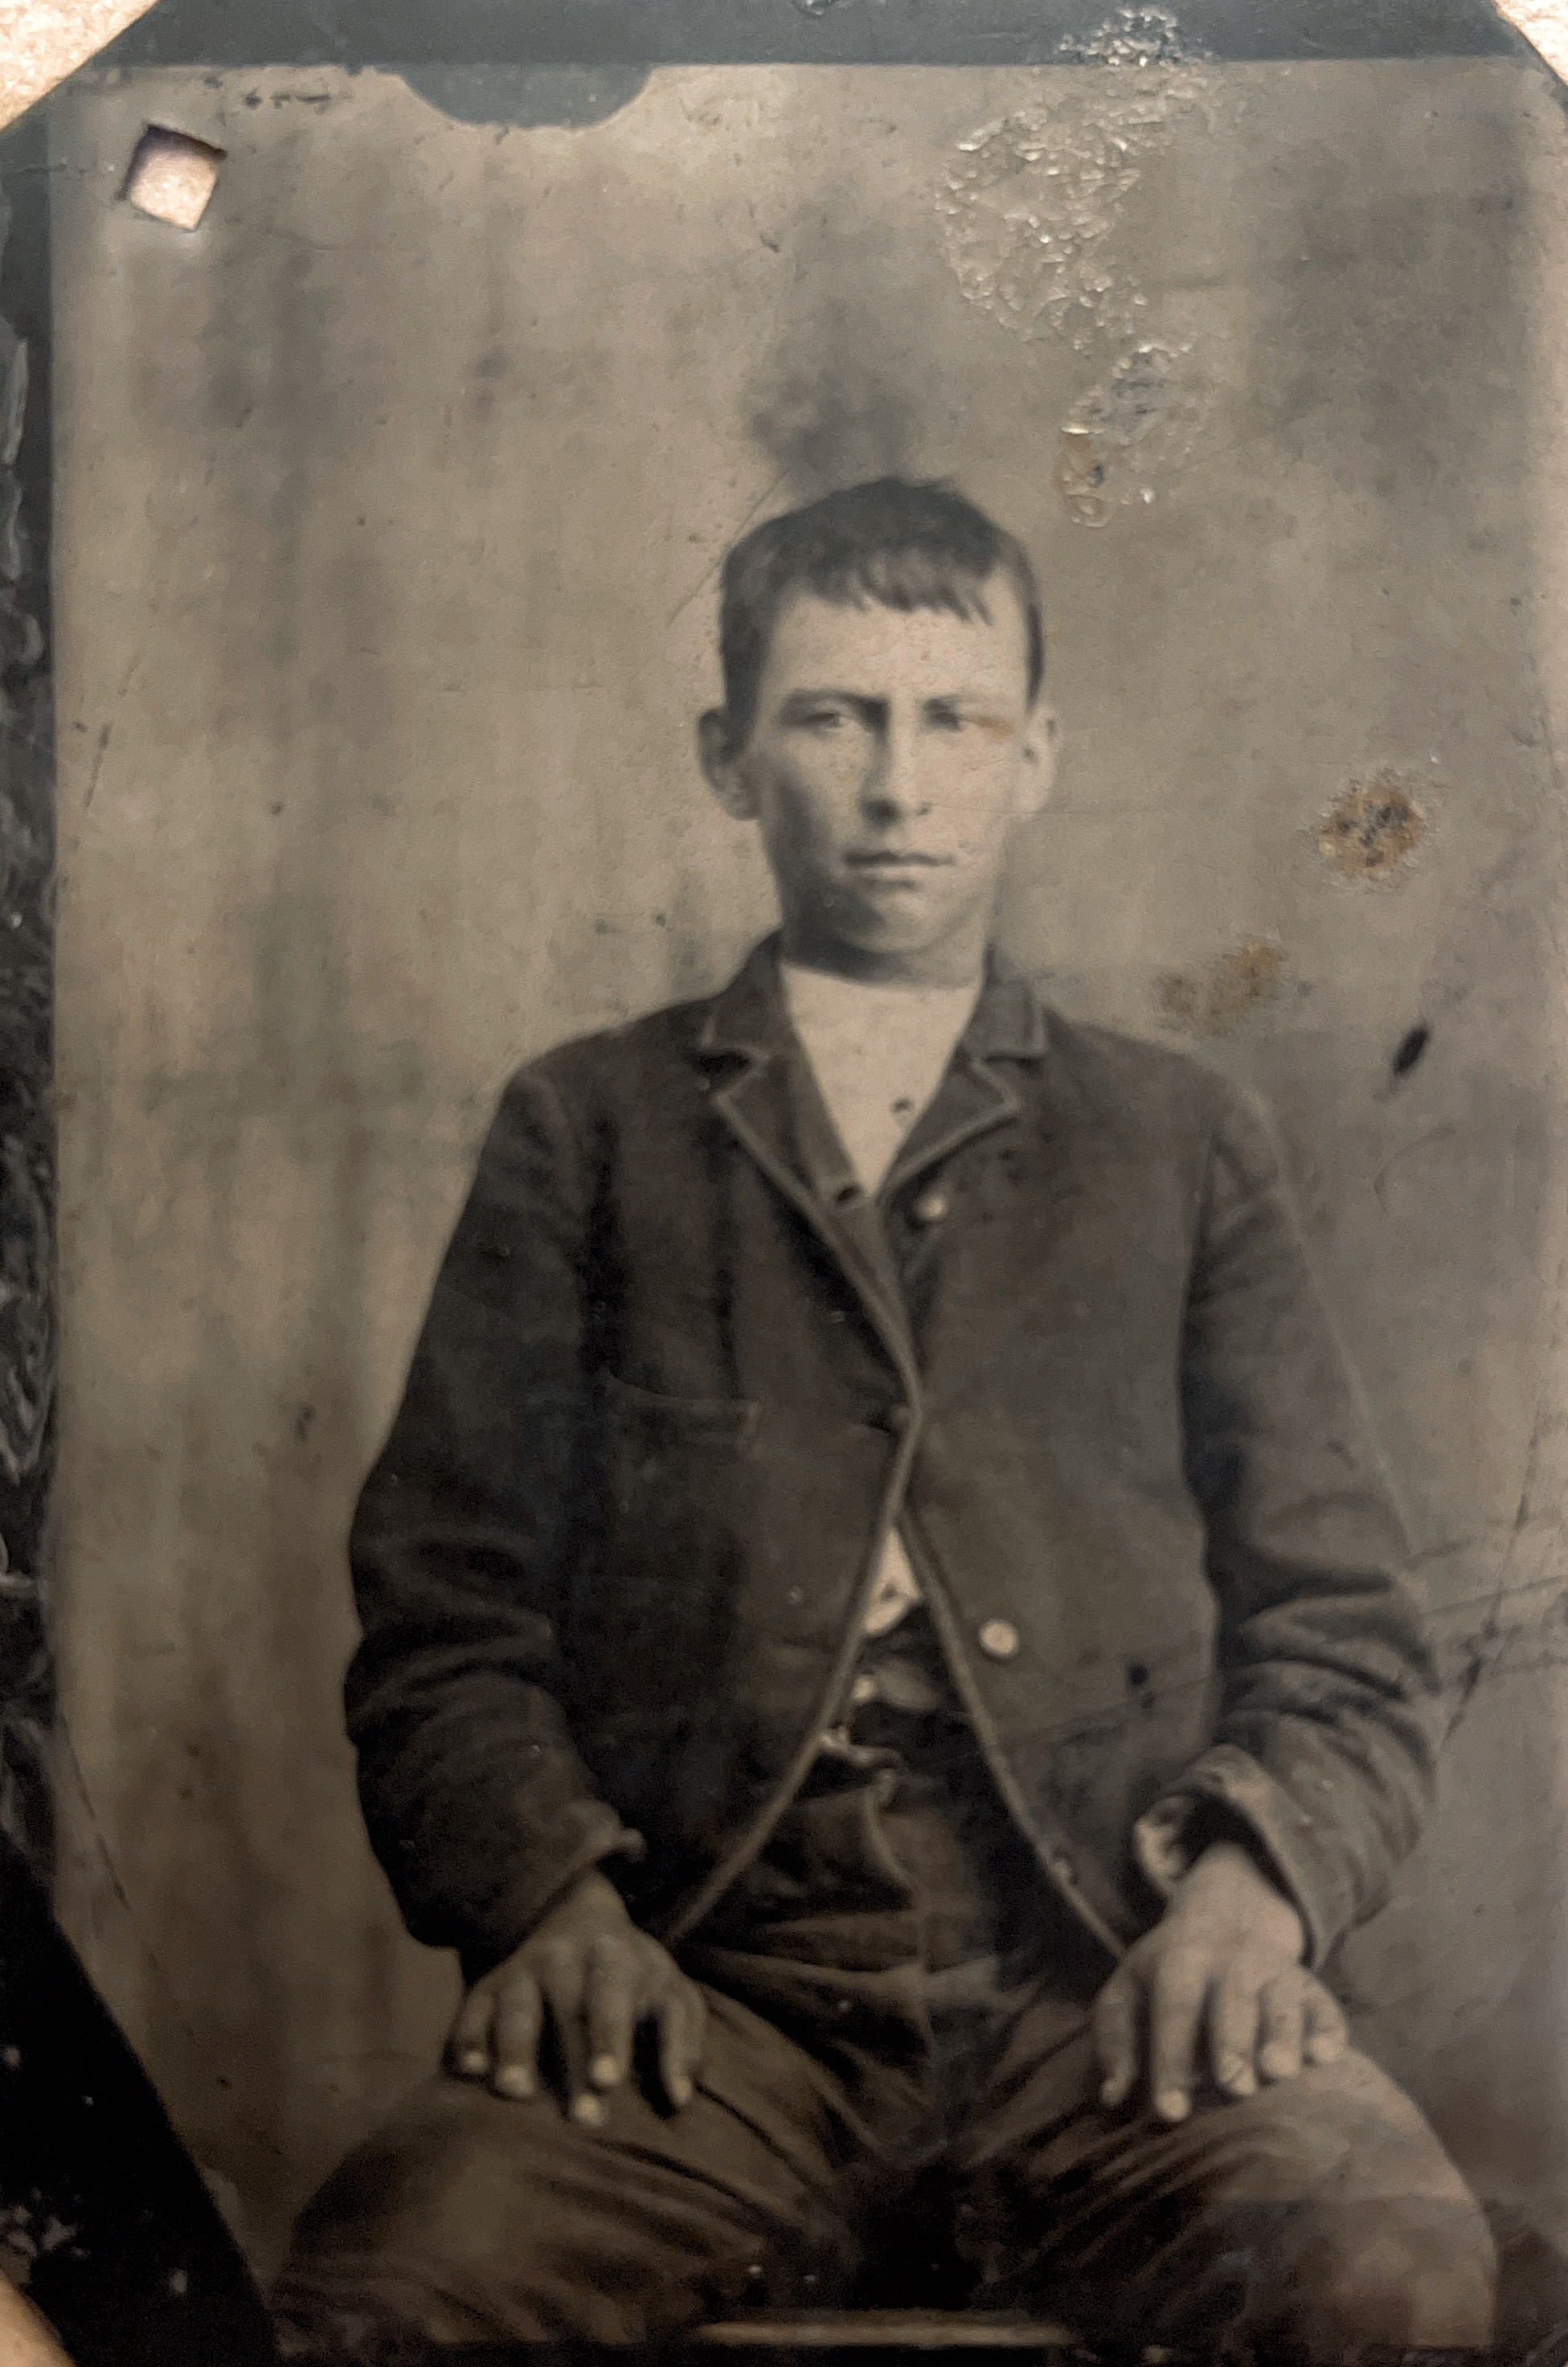 Grandpa (Edwin Chatman) Kerley about 16 years old. Taken approximately 1888. Tintype photo.